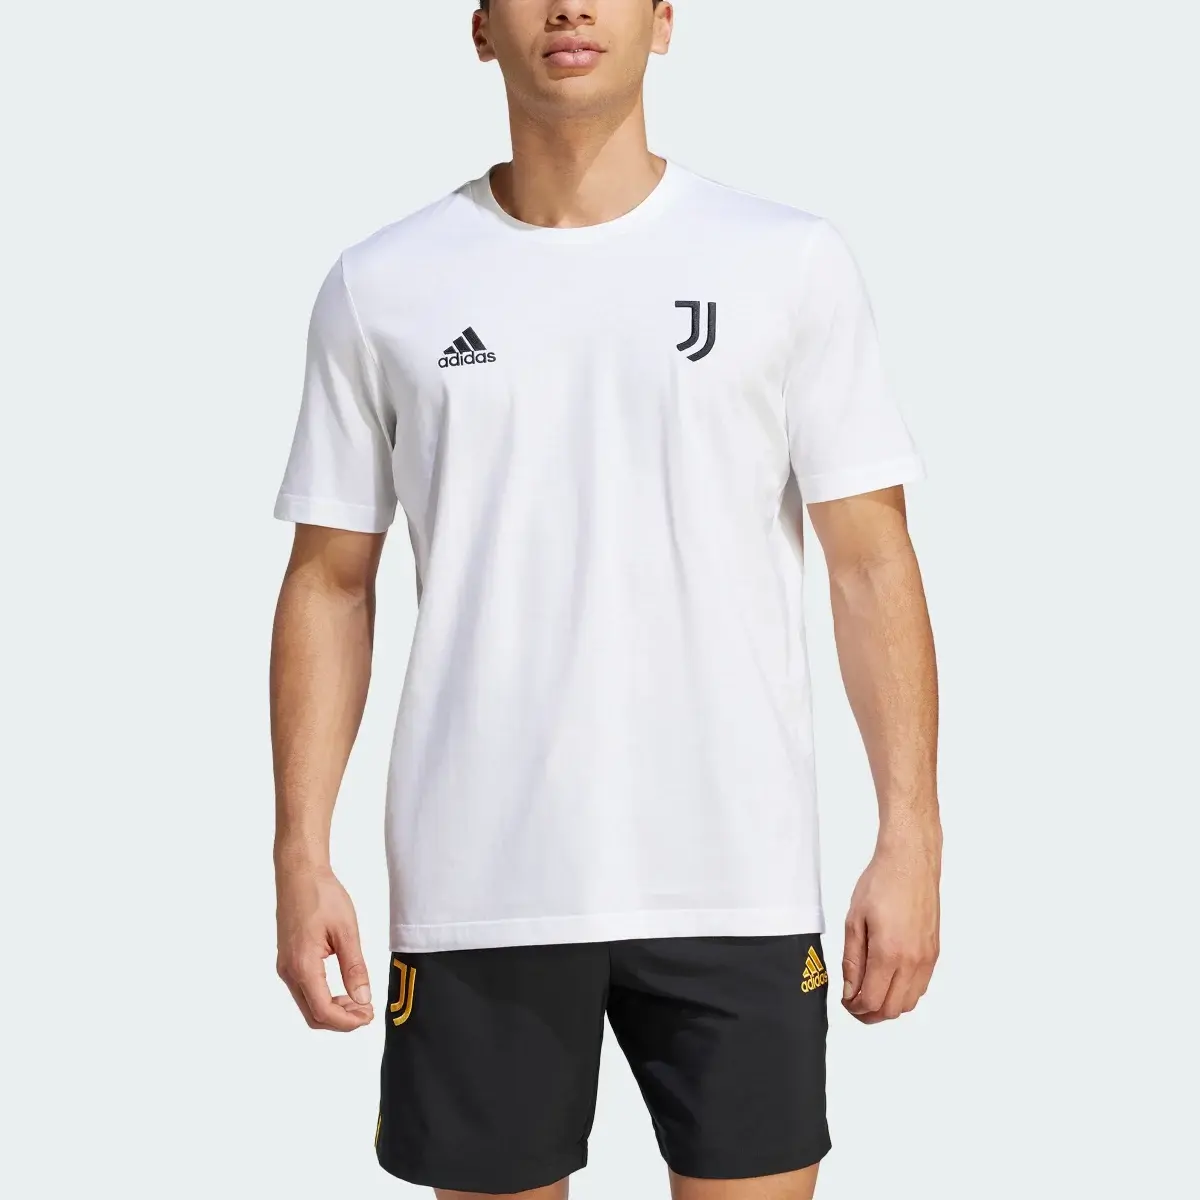 Adidas T-shirt DNA Juventus. 1